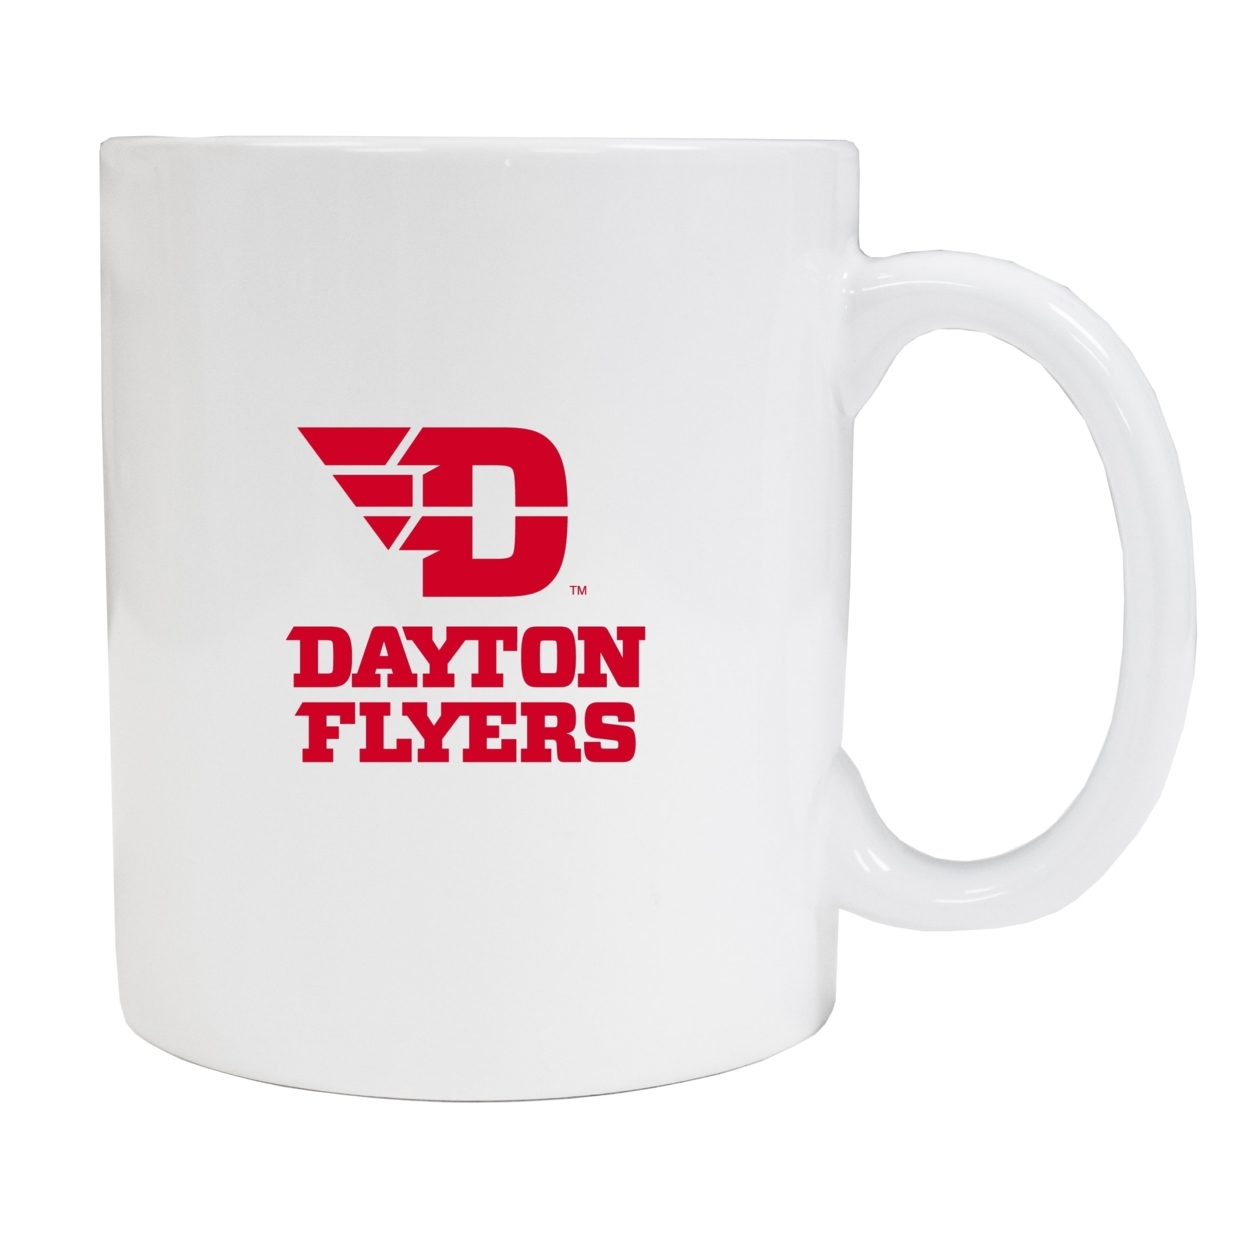 Dayton Flyers White Ceramic Mug (White).